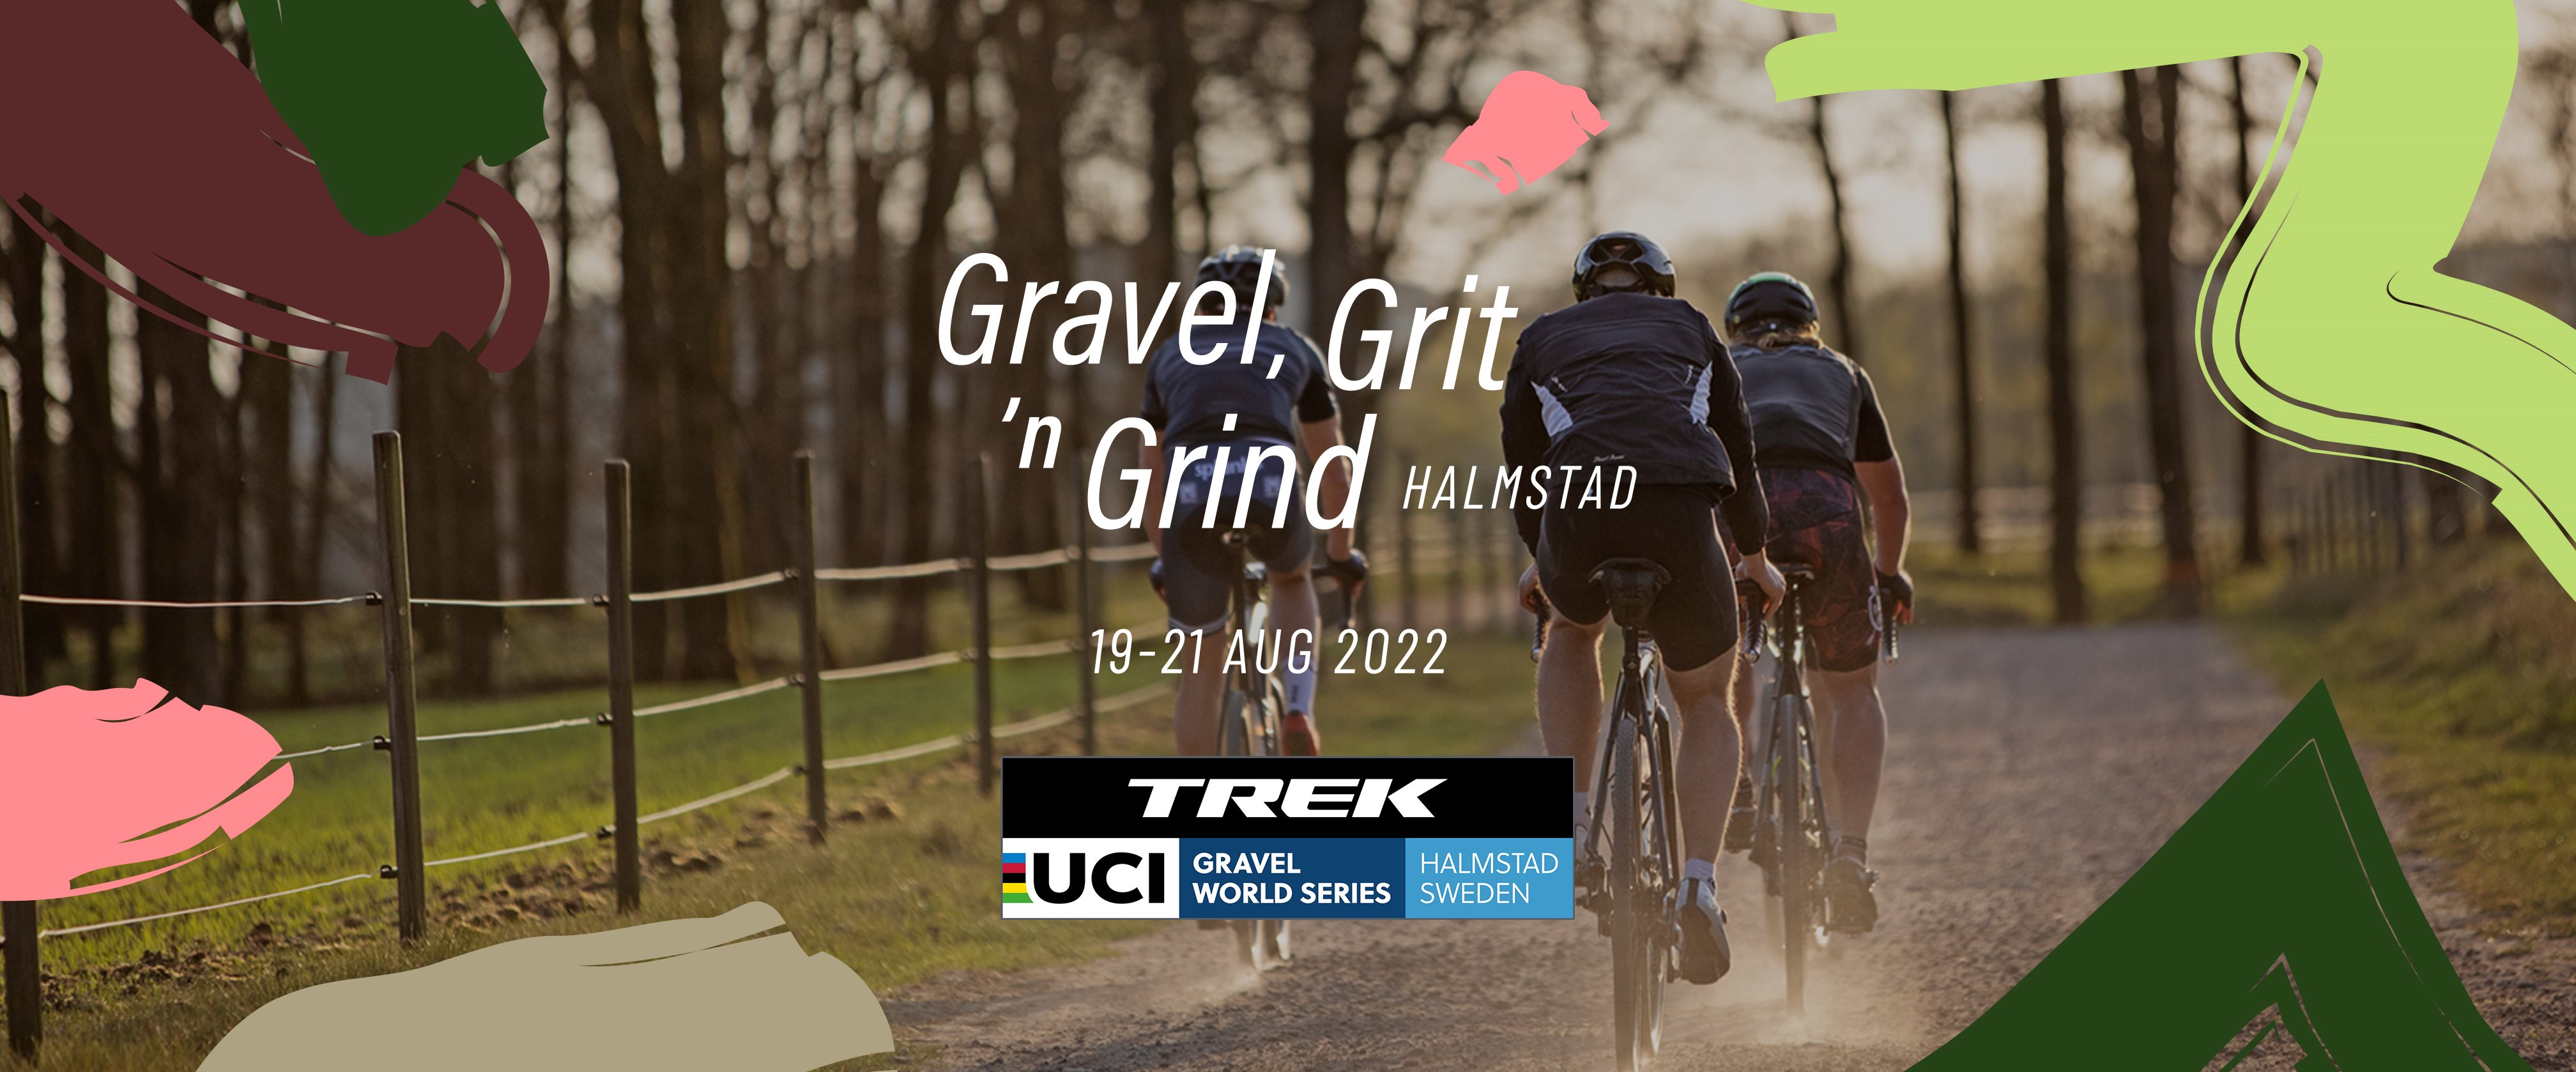 Gravel, Grit 'n Grind Halmstad 2022 Stage 2